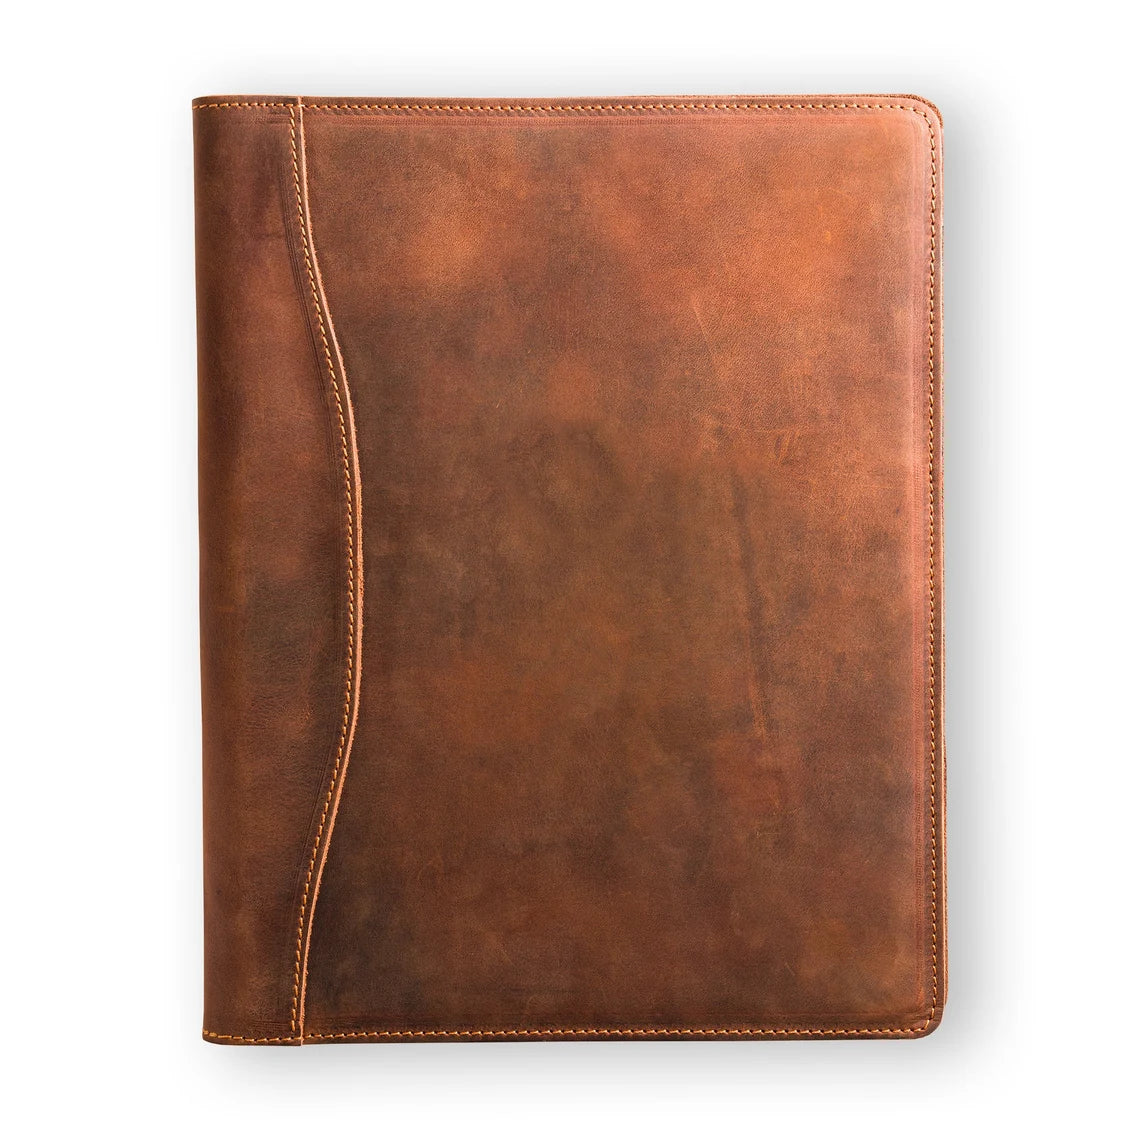 Falit Leather Folio | Handmade Leather Padfolio